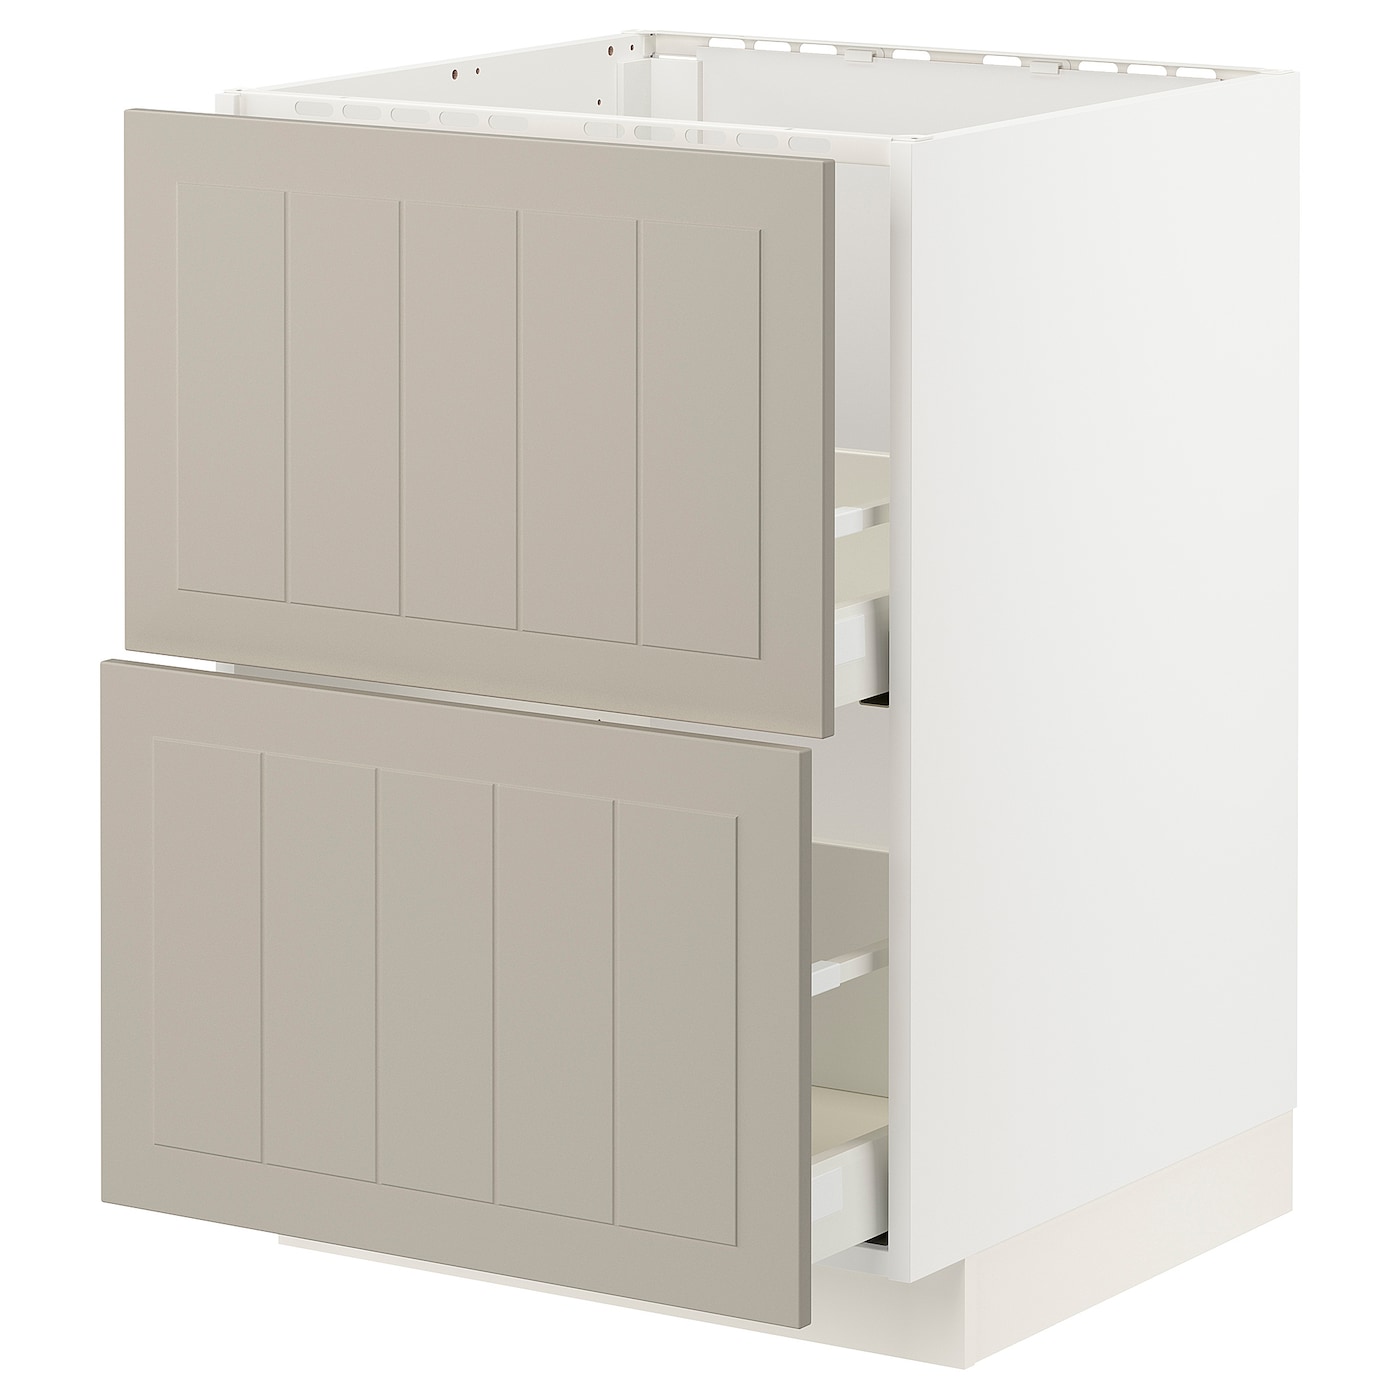 Напольный шкаф - METOD / MAXIMERA IKEA/ МЕТОД/ МАКСИМЕРА ИКЕА,  60х60 см, белый/бежевый